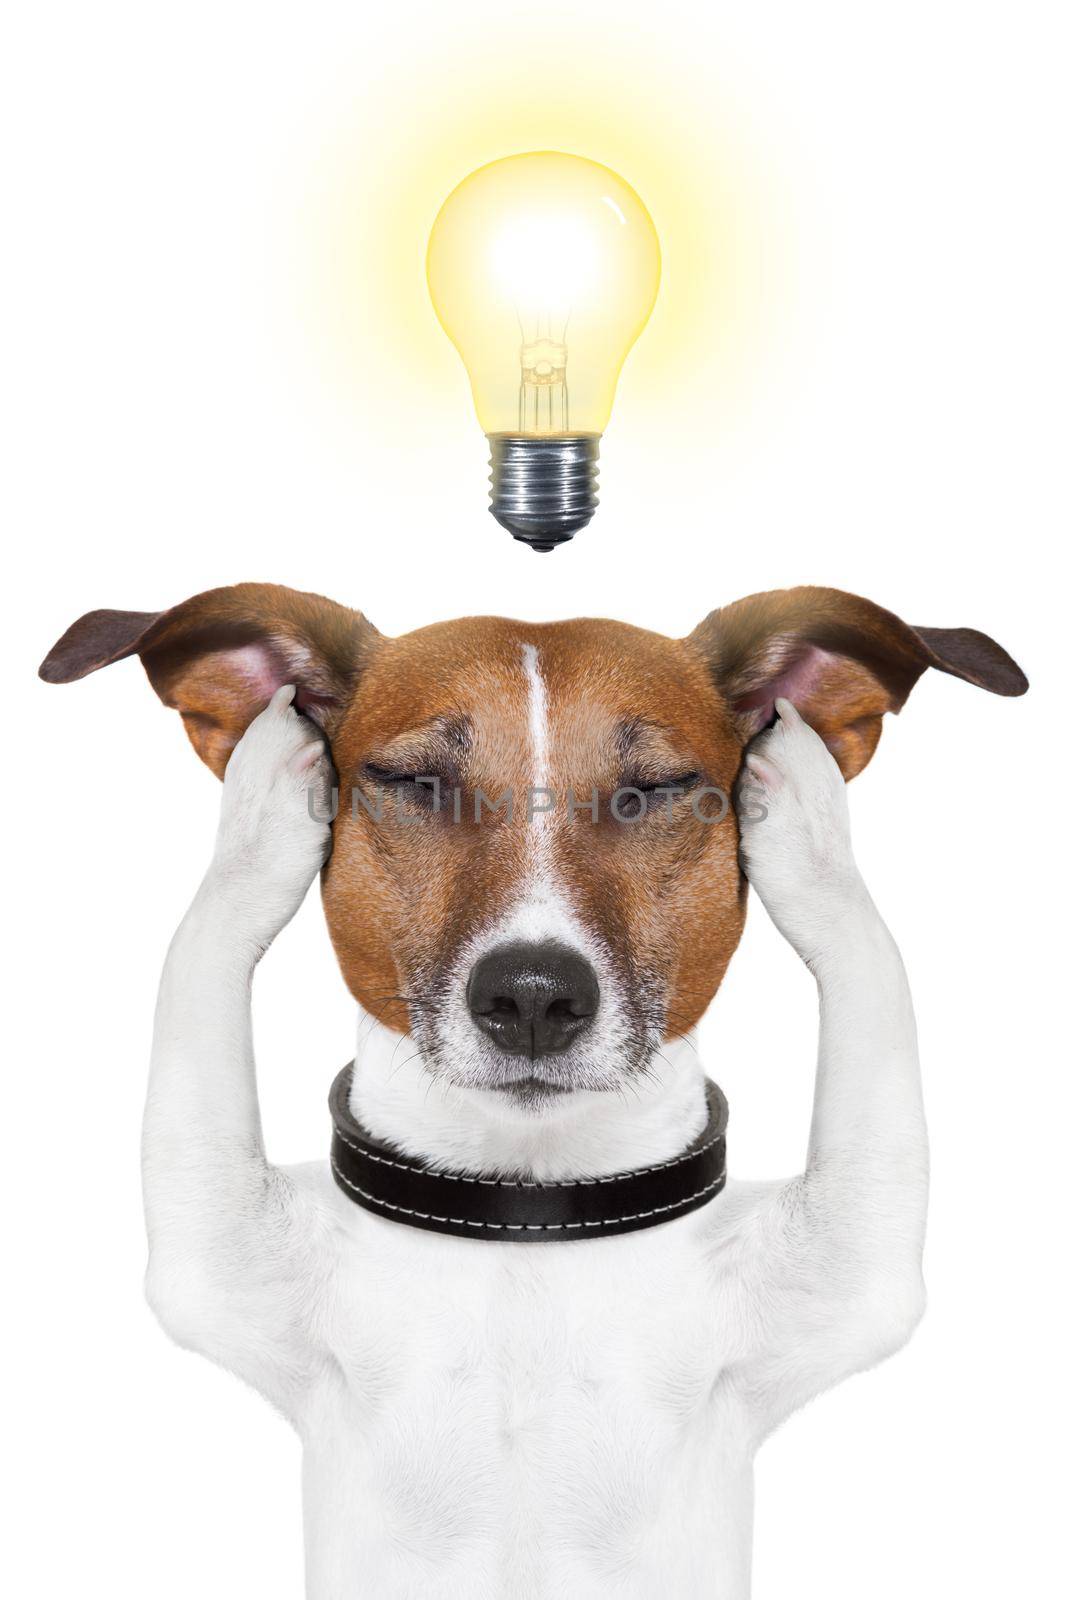 smart intelligent dog by Brosch